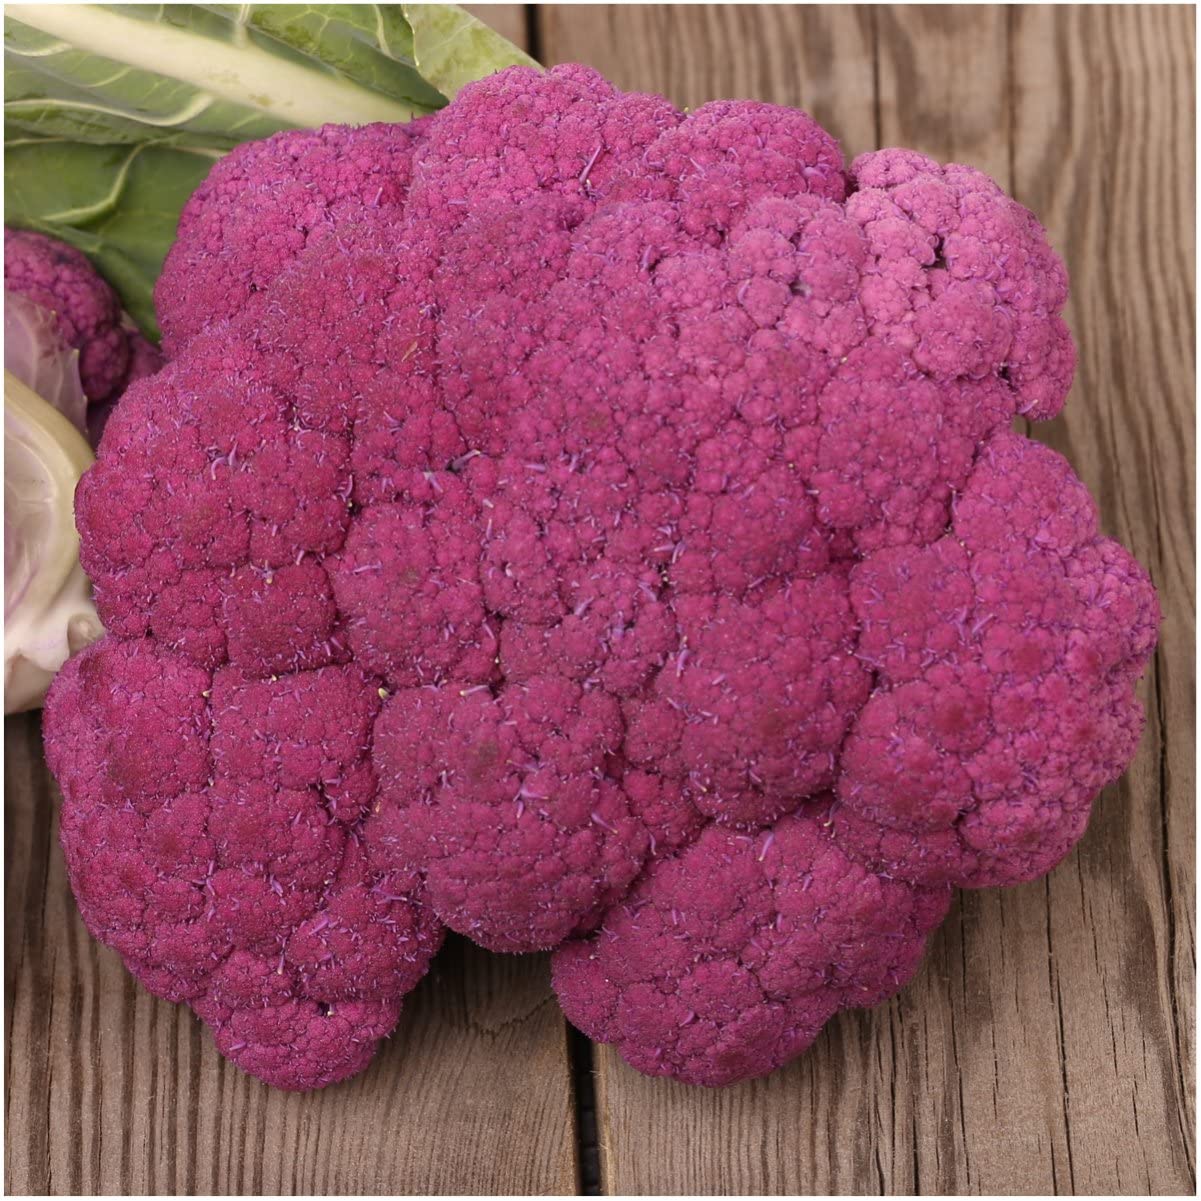 Cauliflower purple